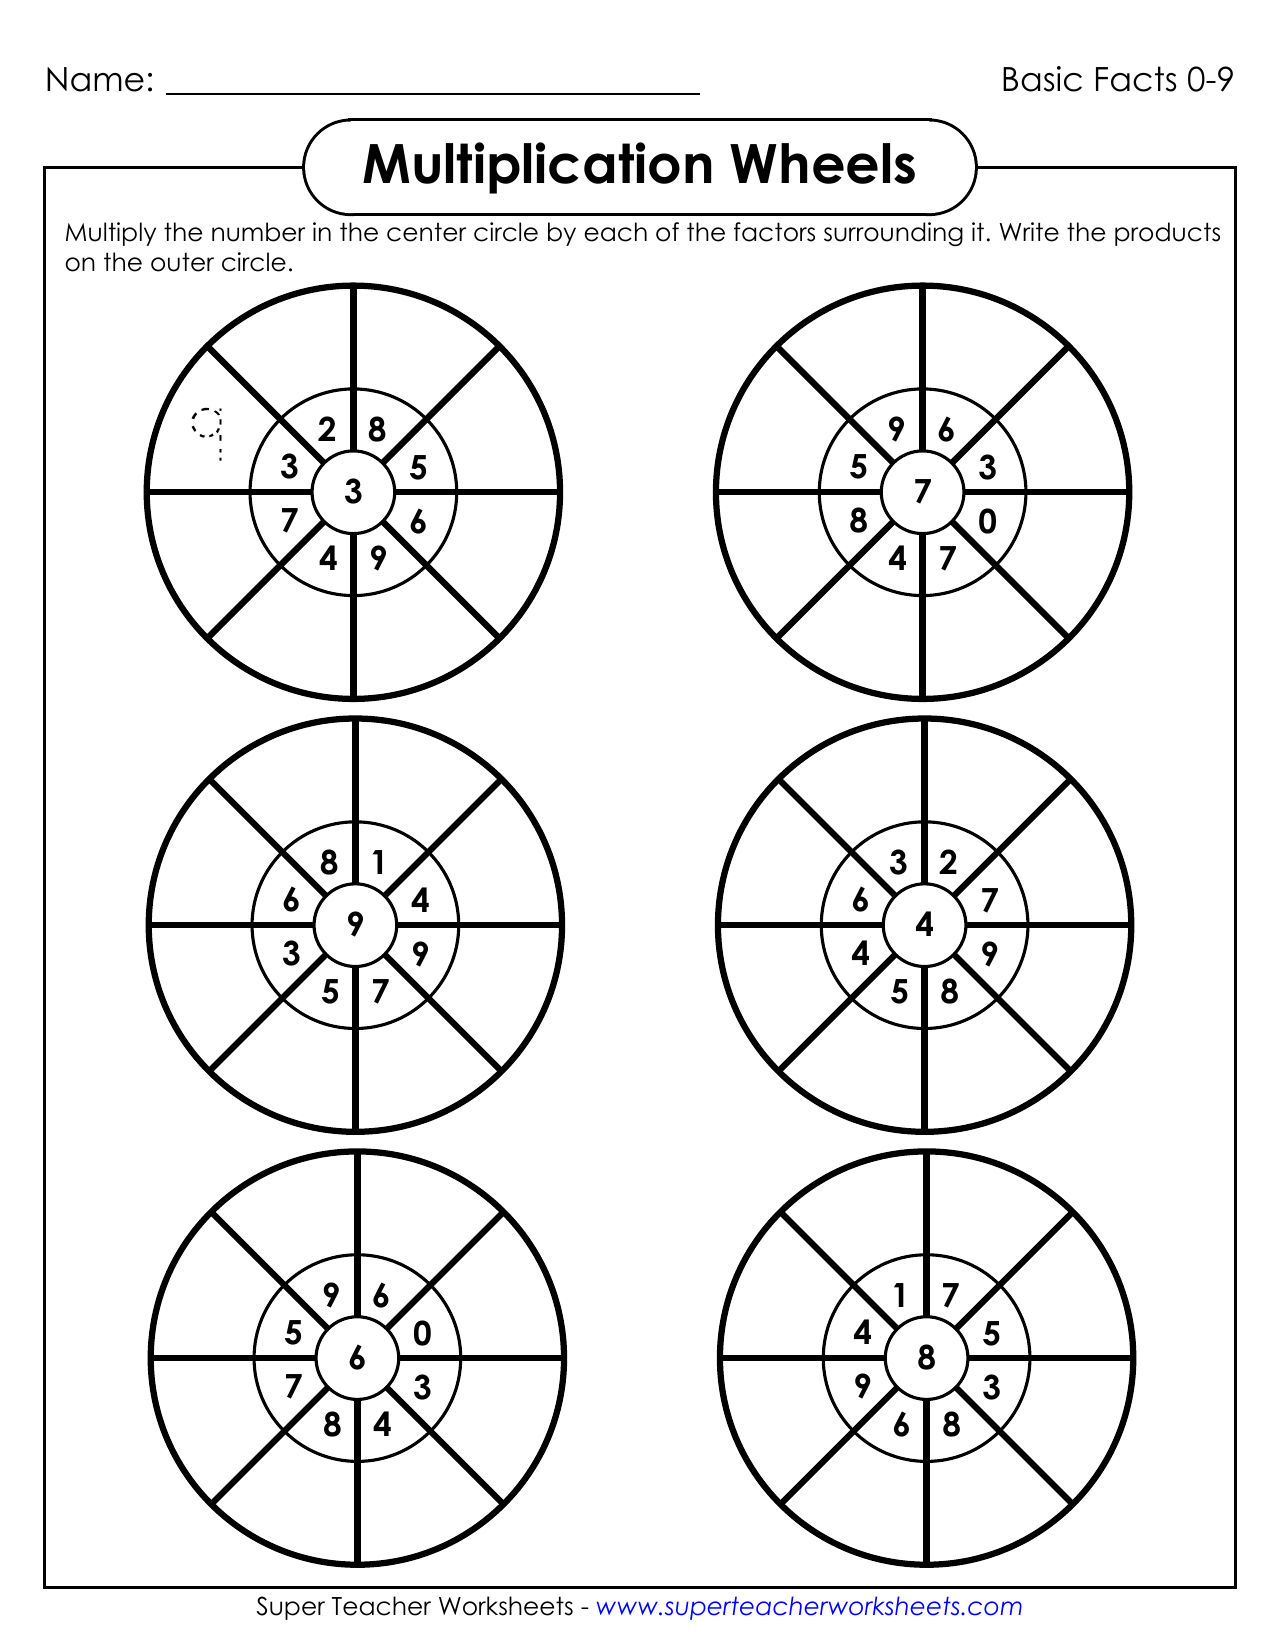 Free Printable Multiplication Wheel Template